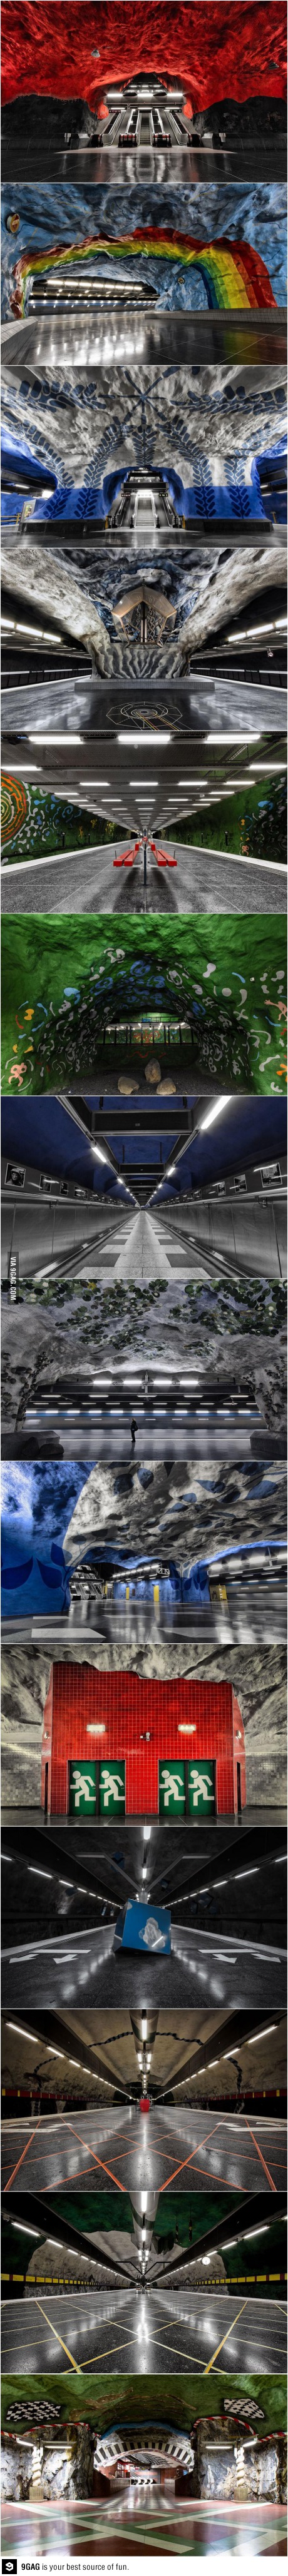 stockholm metro art, underground